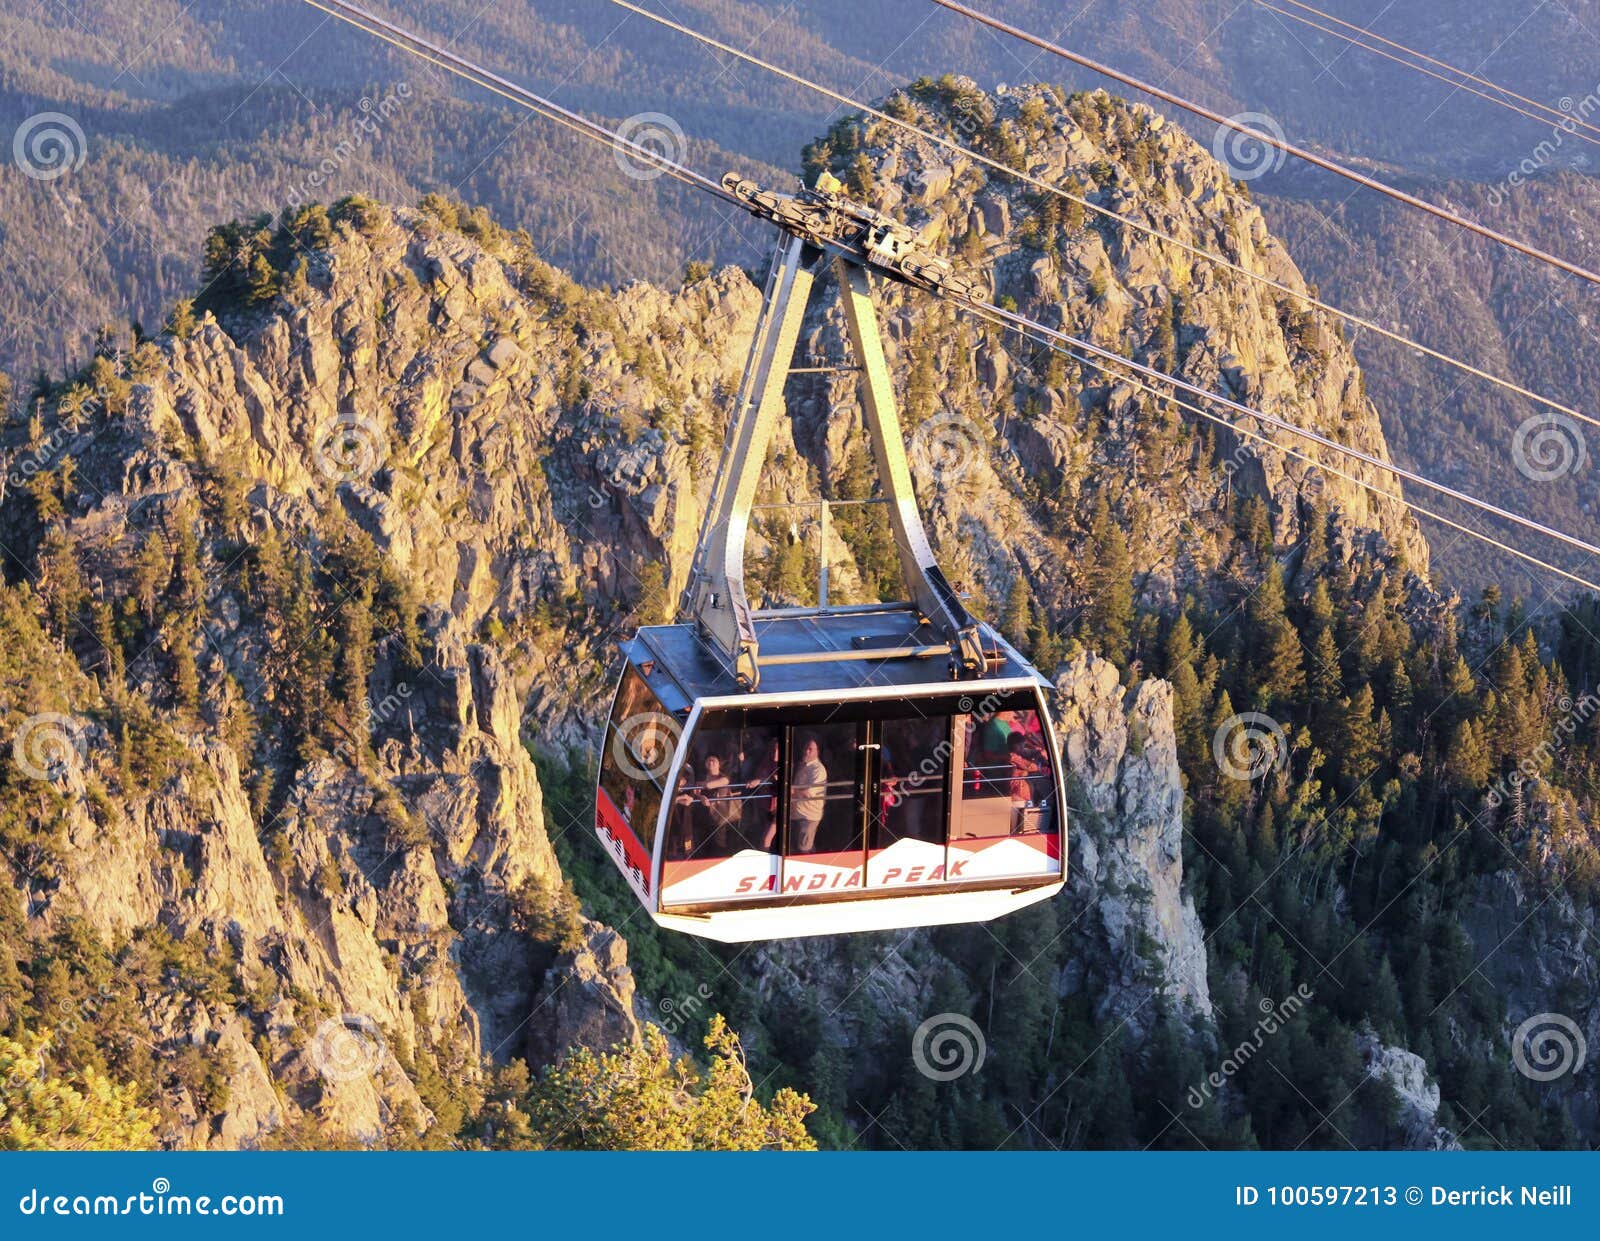 A Sandia Peak Aerial Tramway Uphill Tramcar Editorial Stock Photo